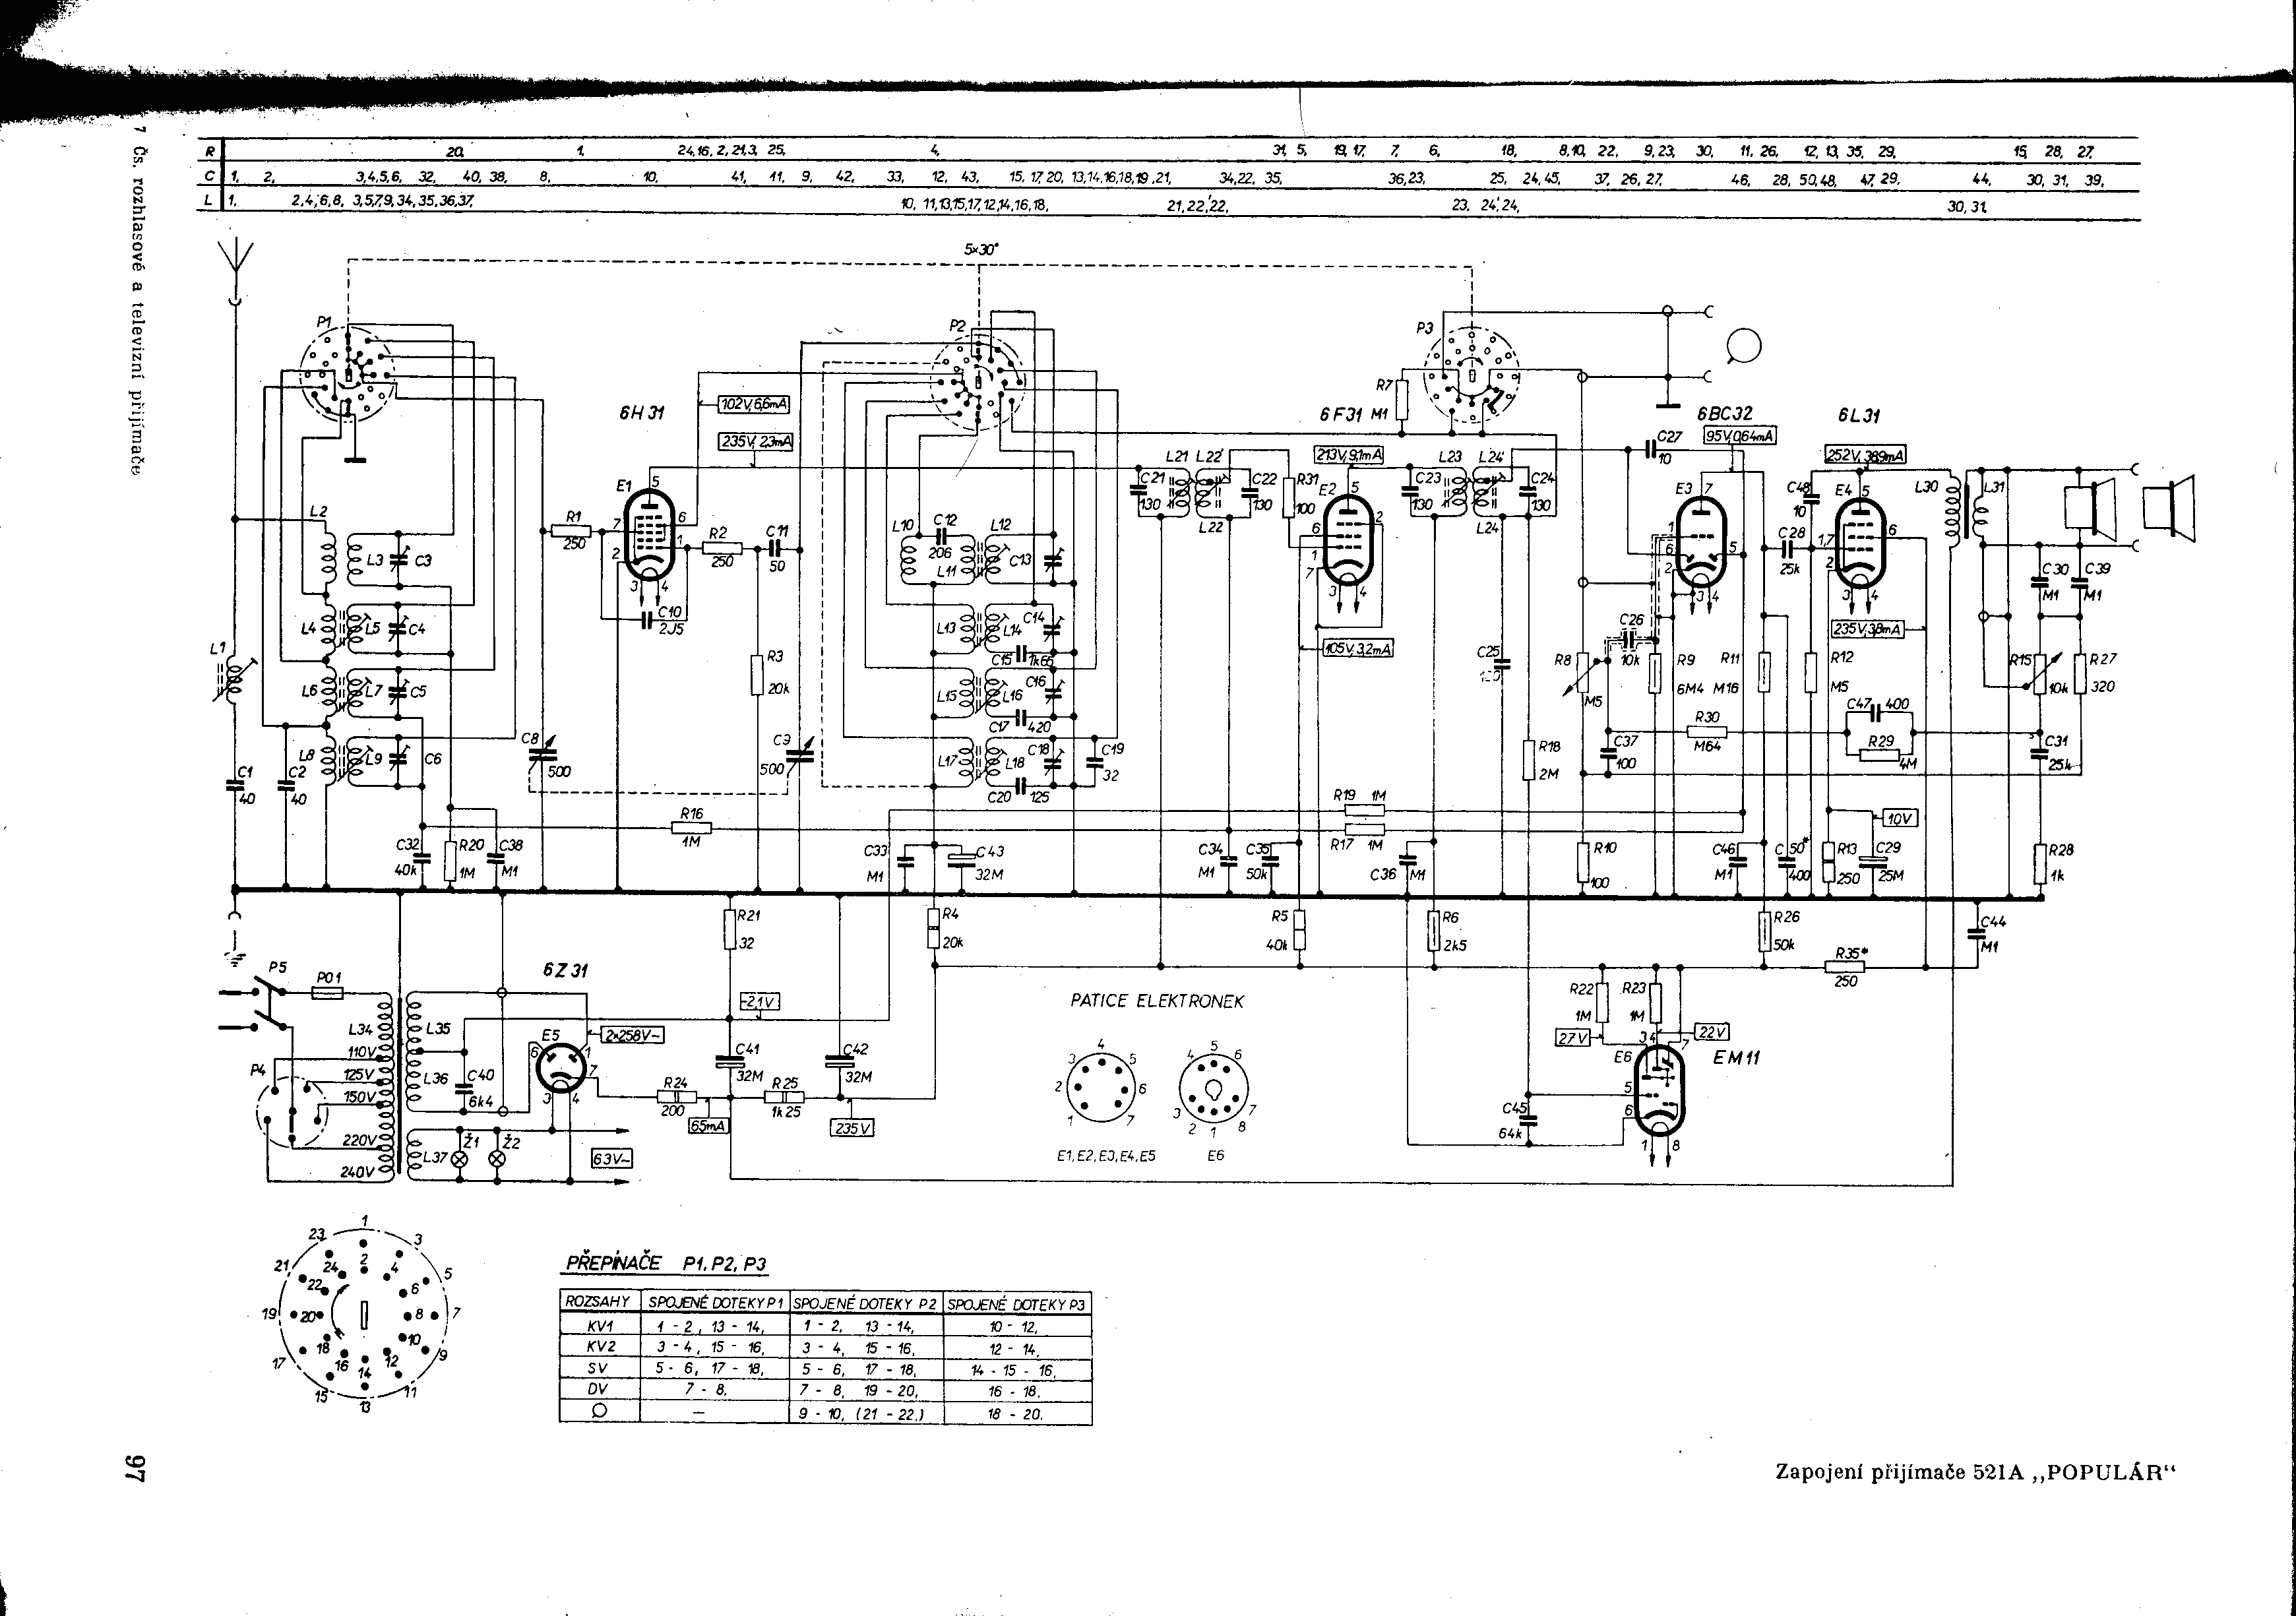 Unusual old resistor symbols identification - Electrical ... 240v circuit breaker wiring diagram 